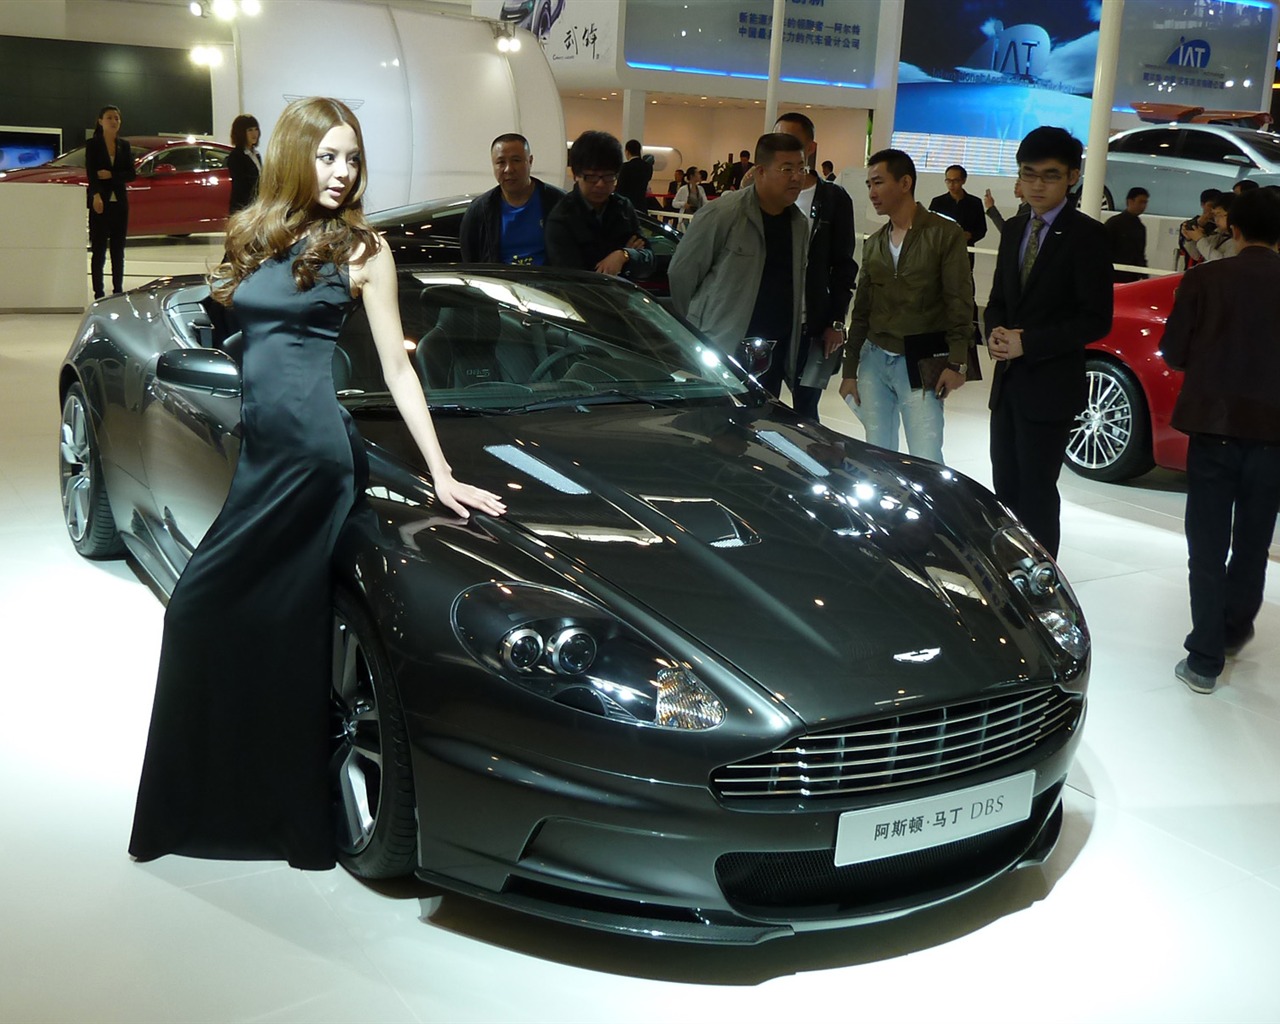 2010 Beijing Auto Show (Gemini Dream Works) #2 - 1280x1024